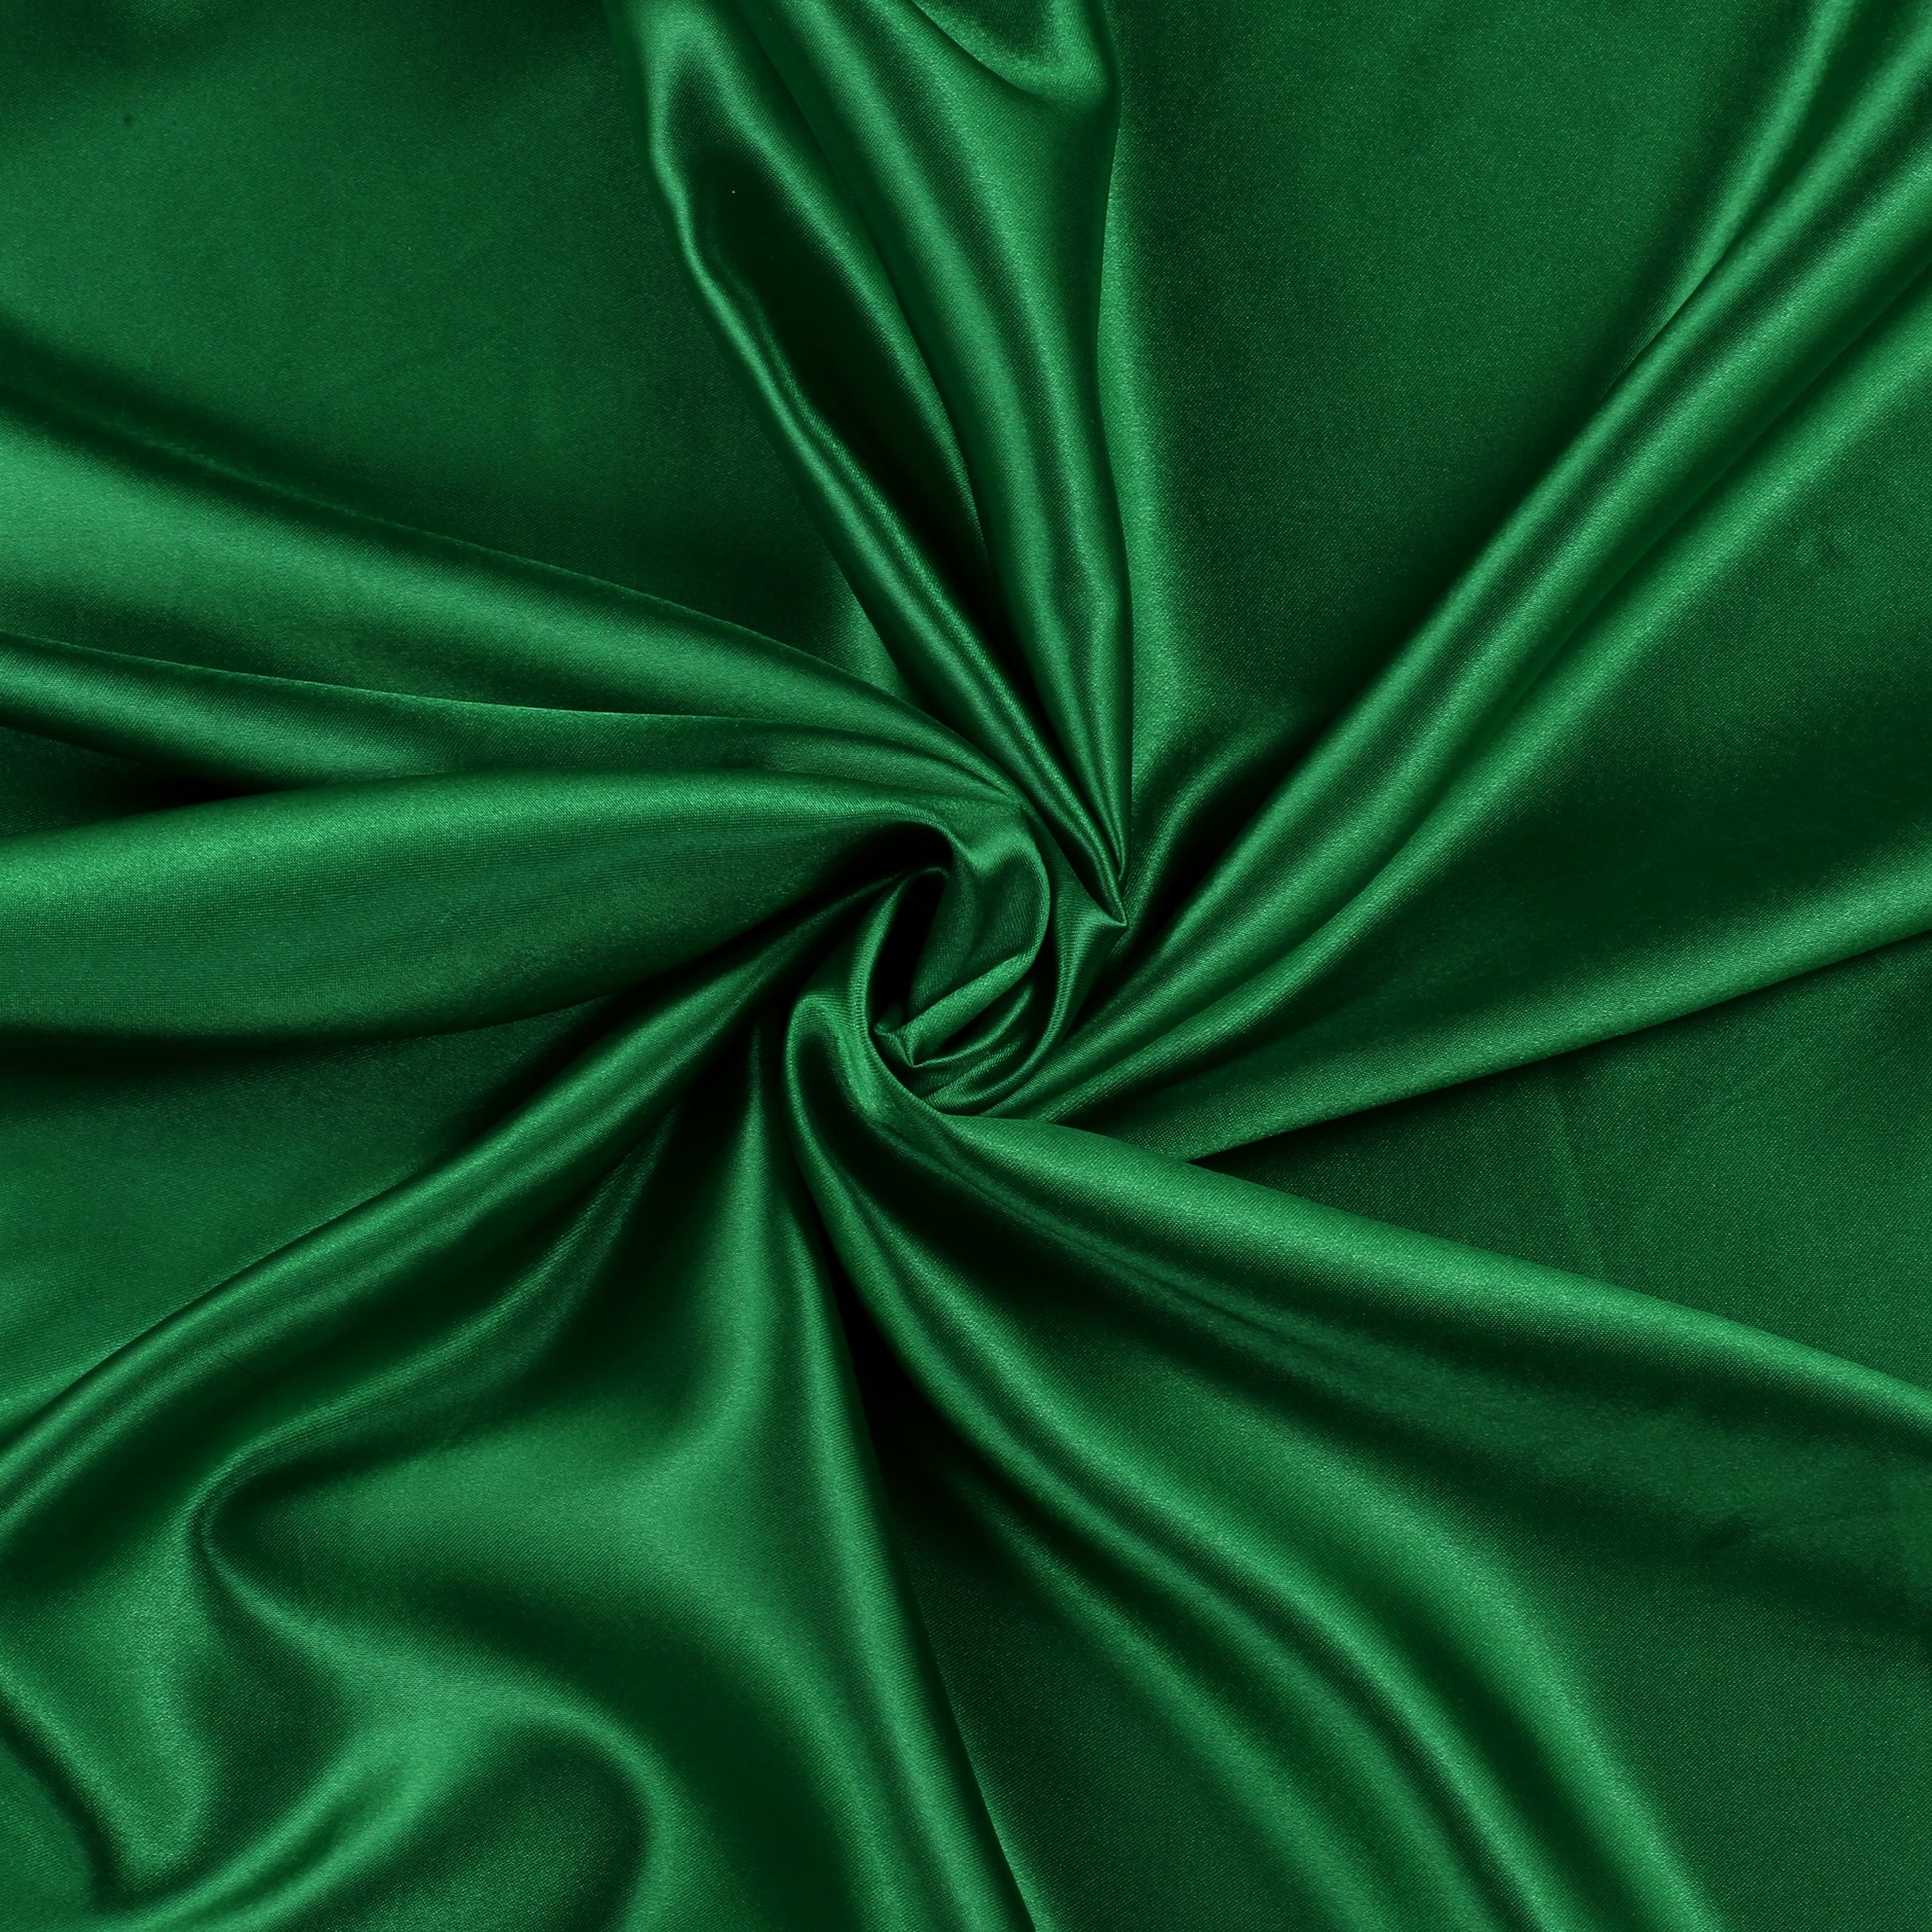 Green,bfee9d7c-29e3-4f58-900d-45f9b05ed2fb